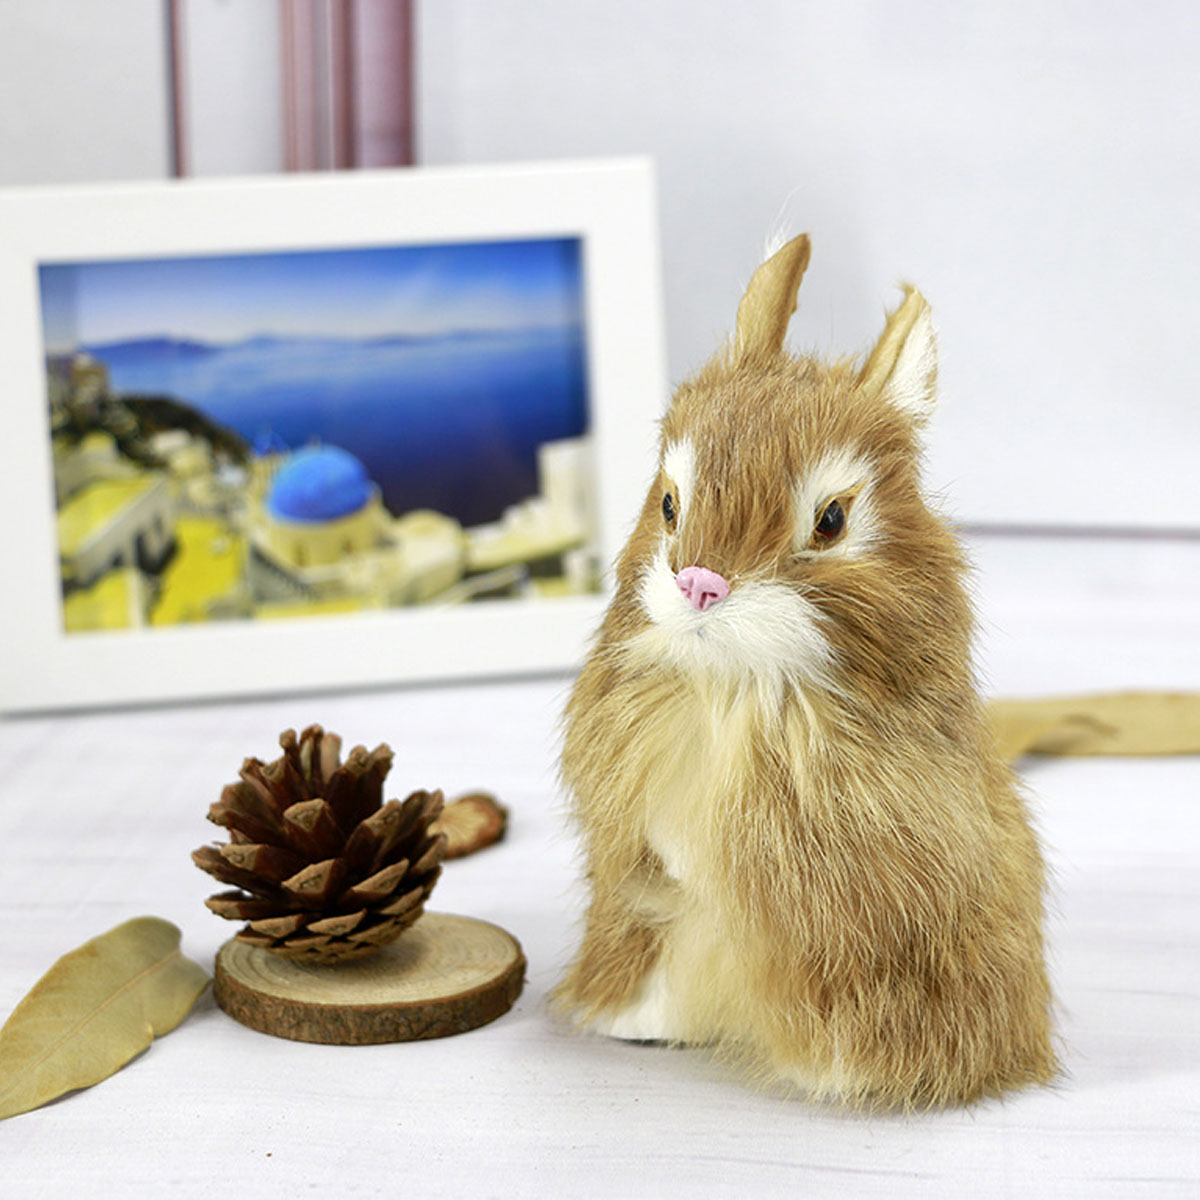 GrayYellowBrownWhite-Rabbits-Handmade-Easter-Bunnies-Home-Decorations-Desktop-Ornament-1452976-5